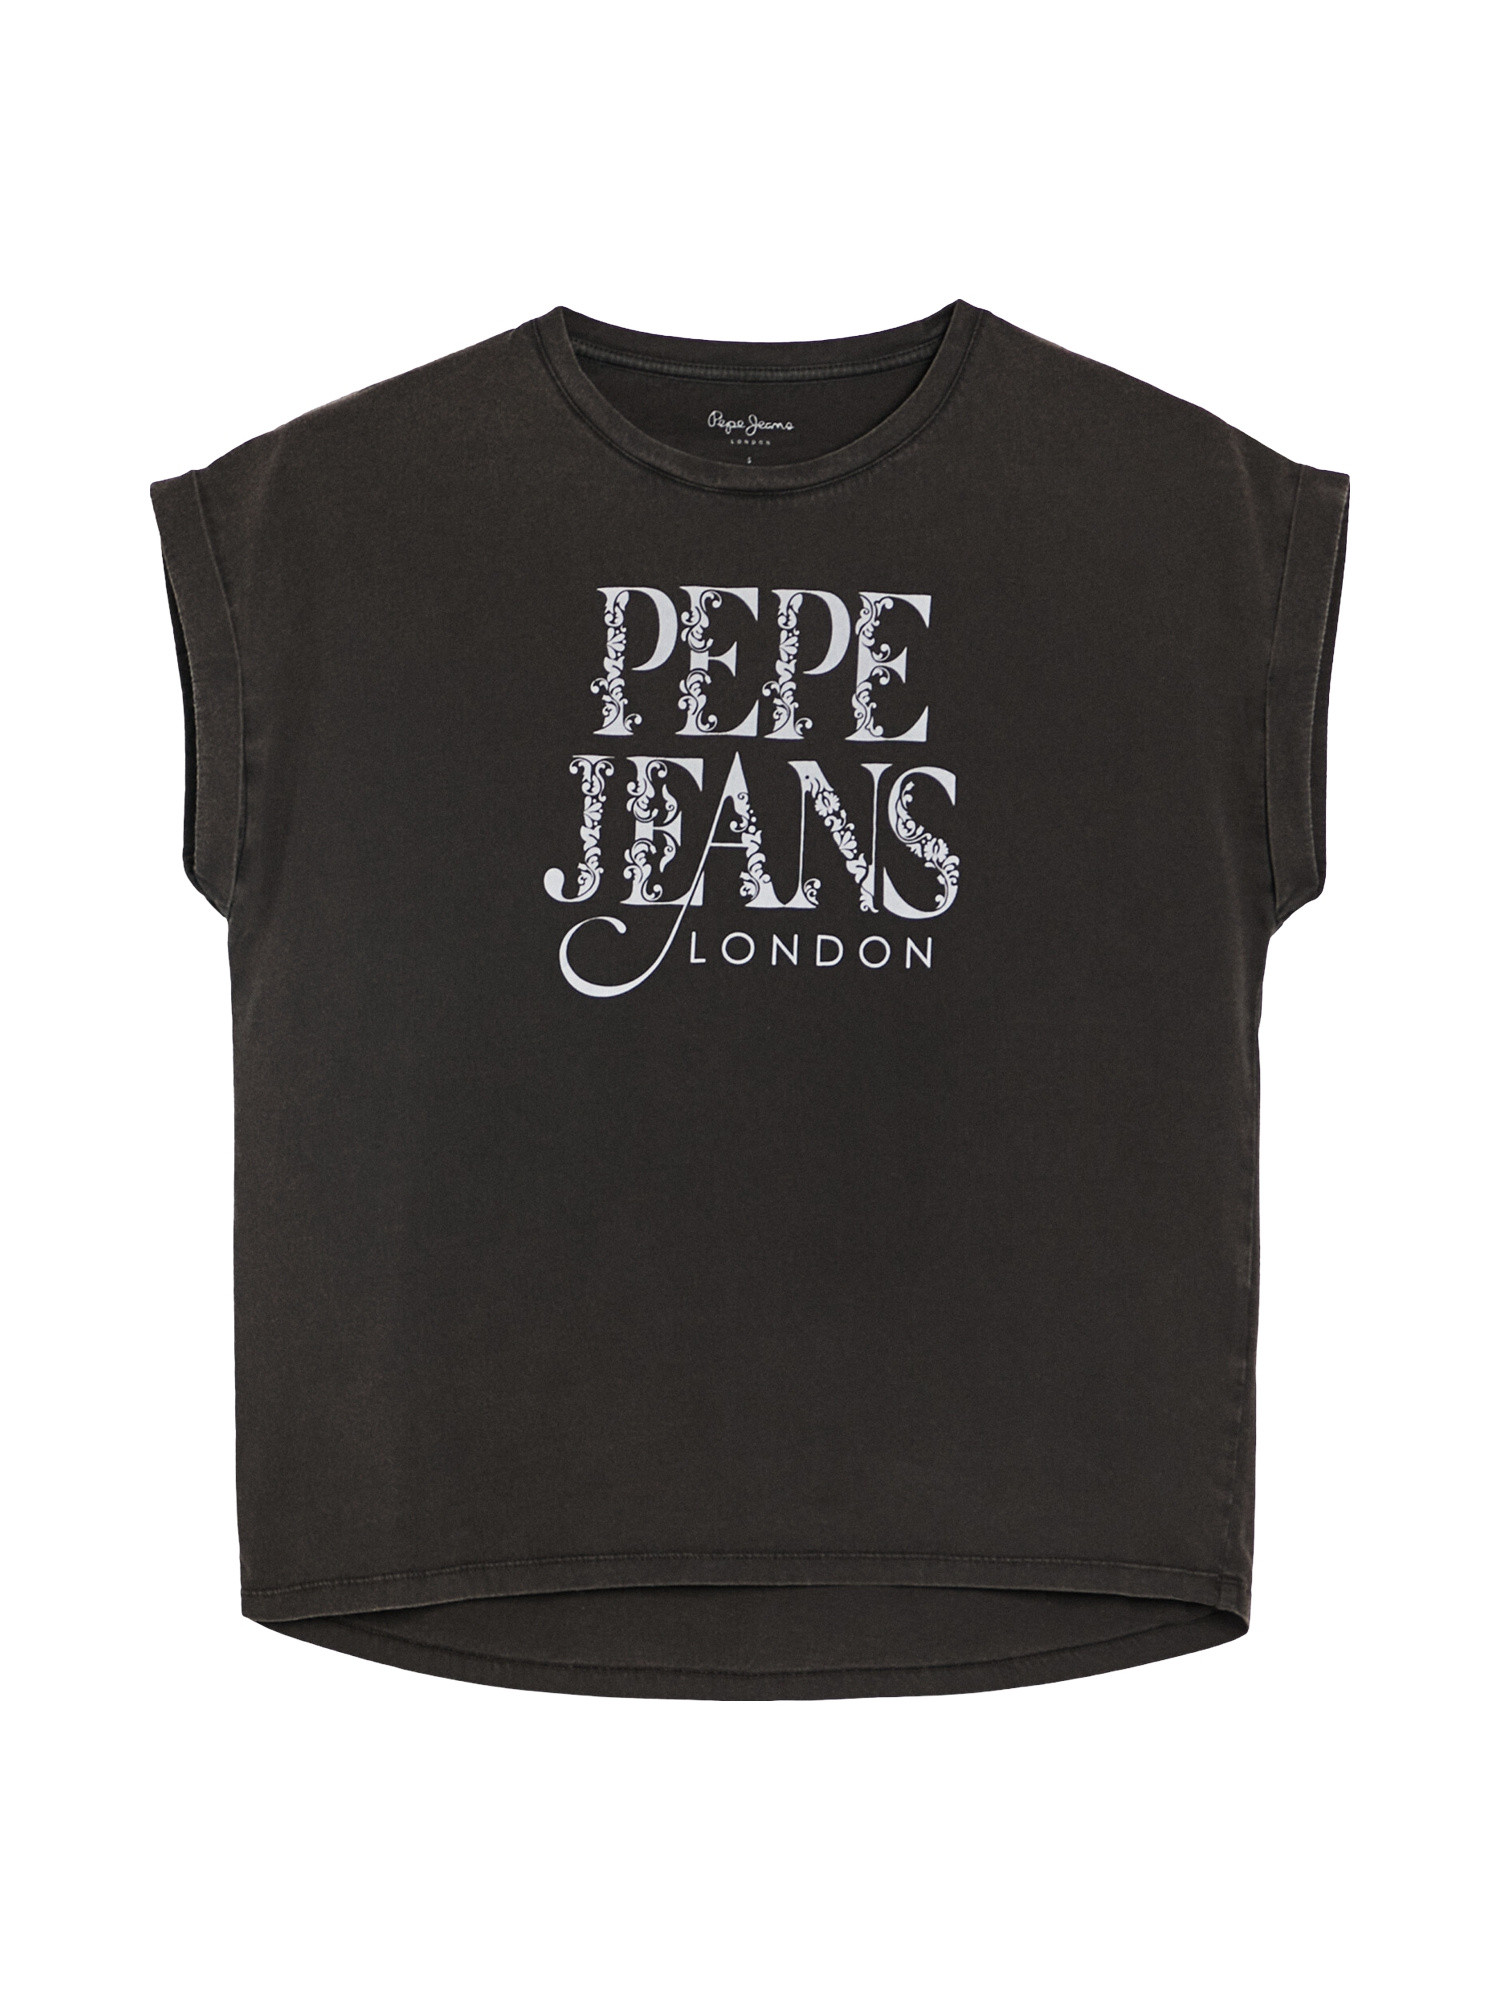 Pepe Jeans - Cotton logo T-shirt, Black, large image number 0